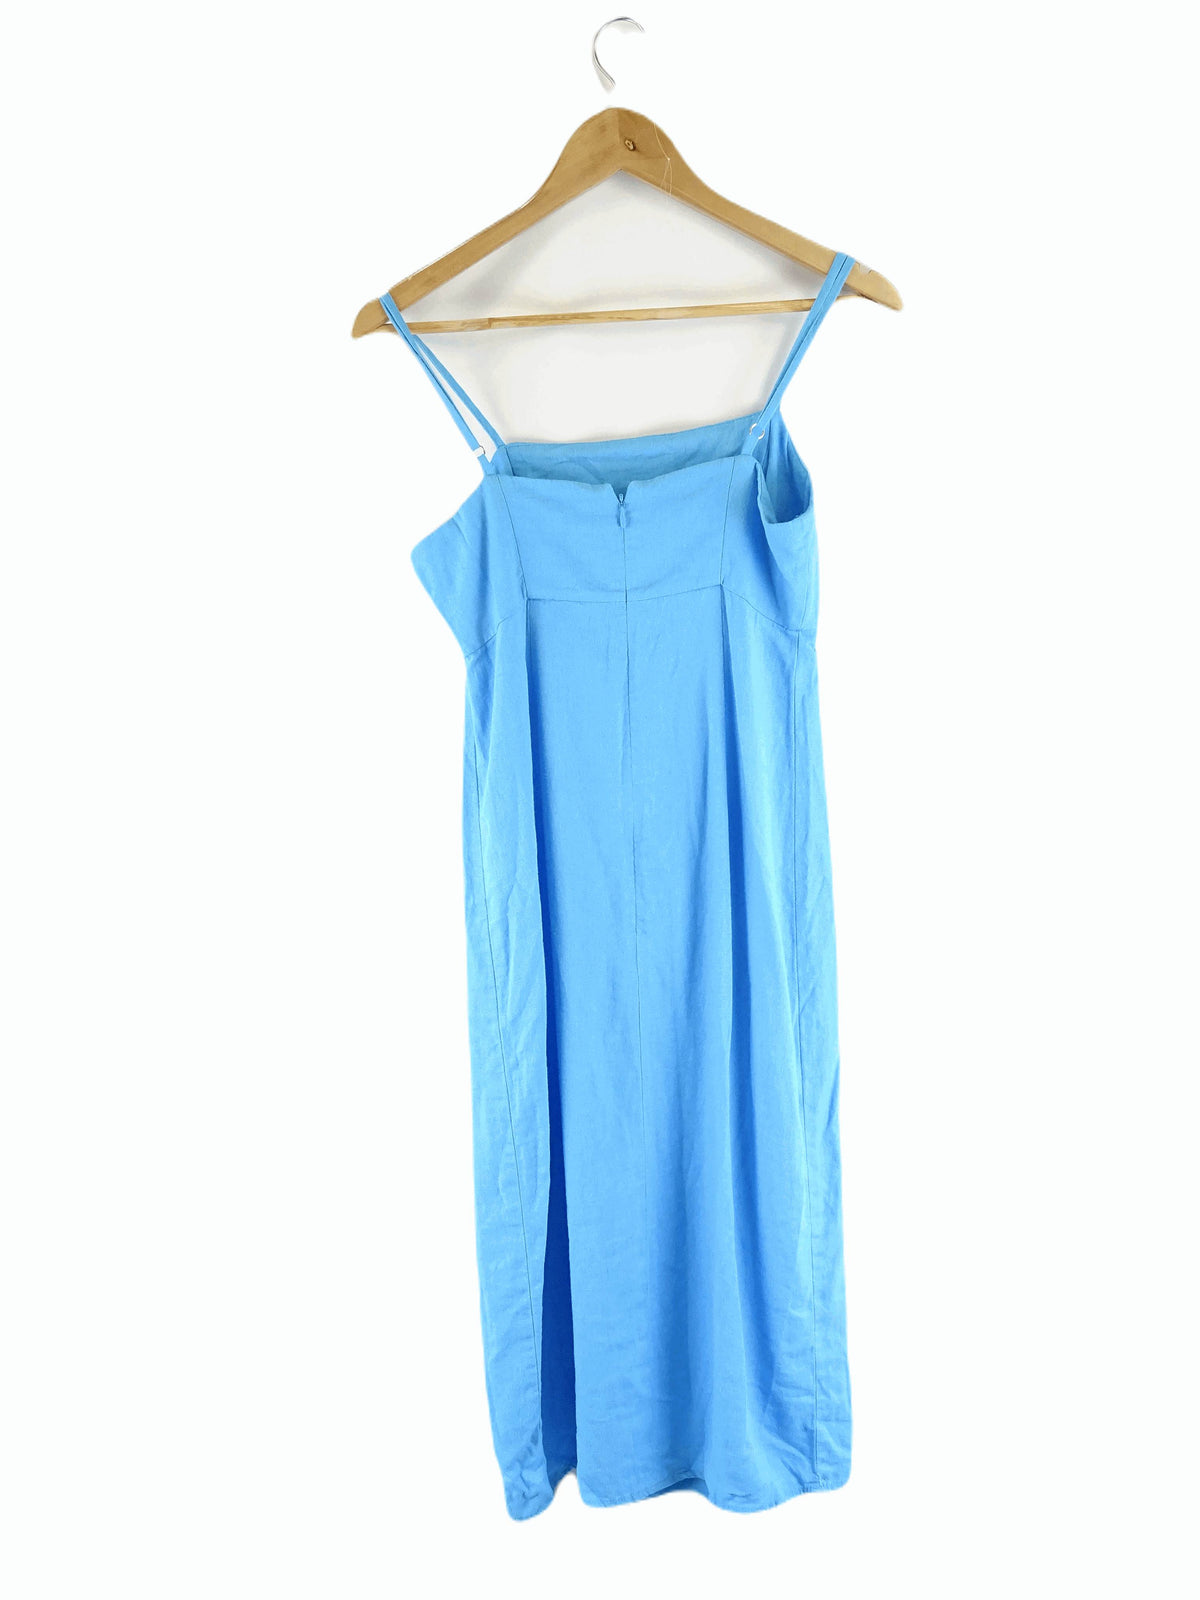 Only Denim Blue Linen Dress 34 (AU 6)